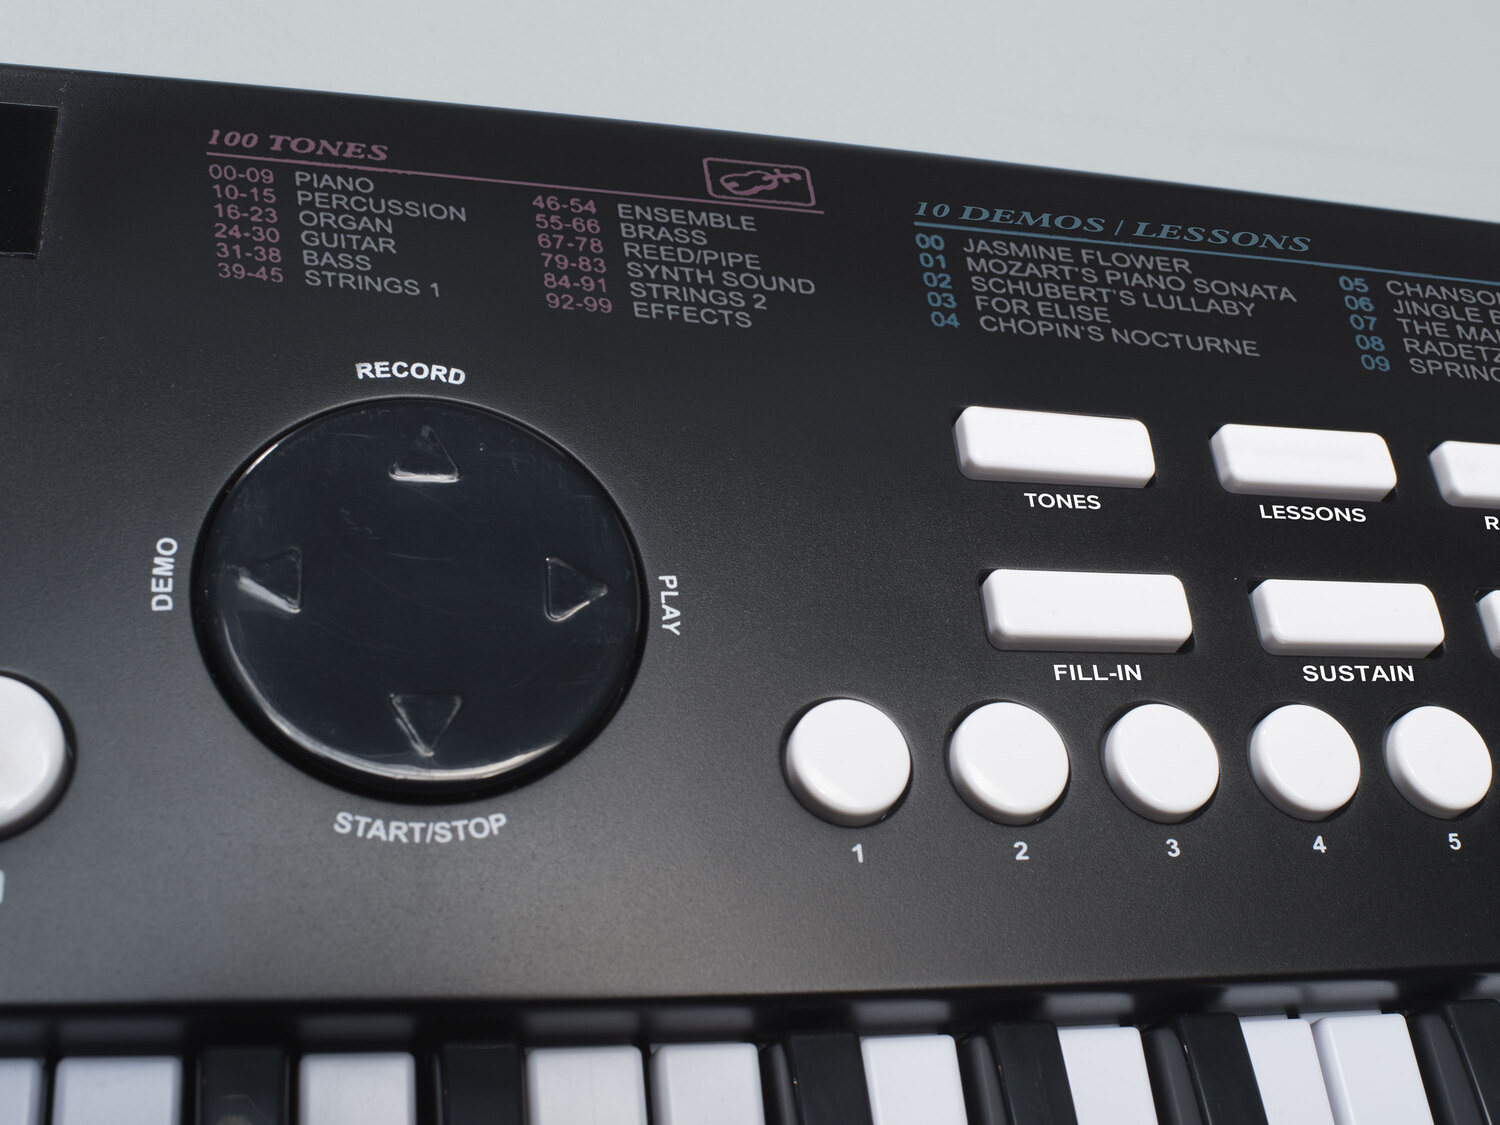 Keyboard Sheffield, cena 89,90 PLN 
2 kolory 
- efekty: sustain (dźwięk) i vibrato
- ...